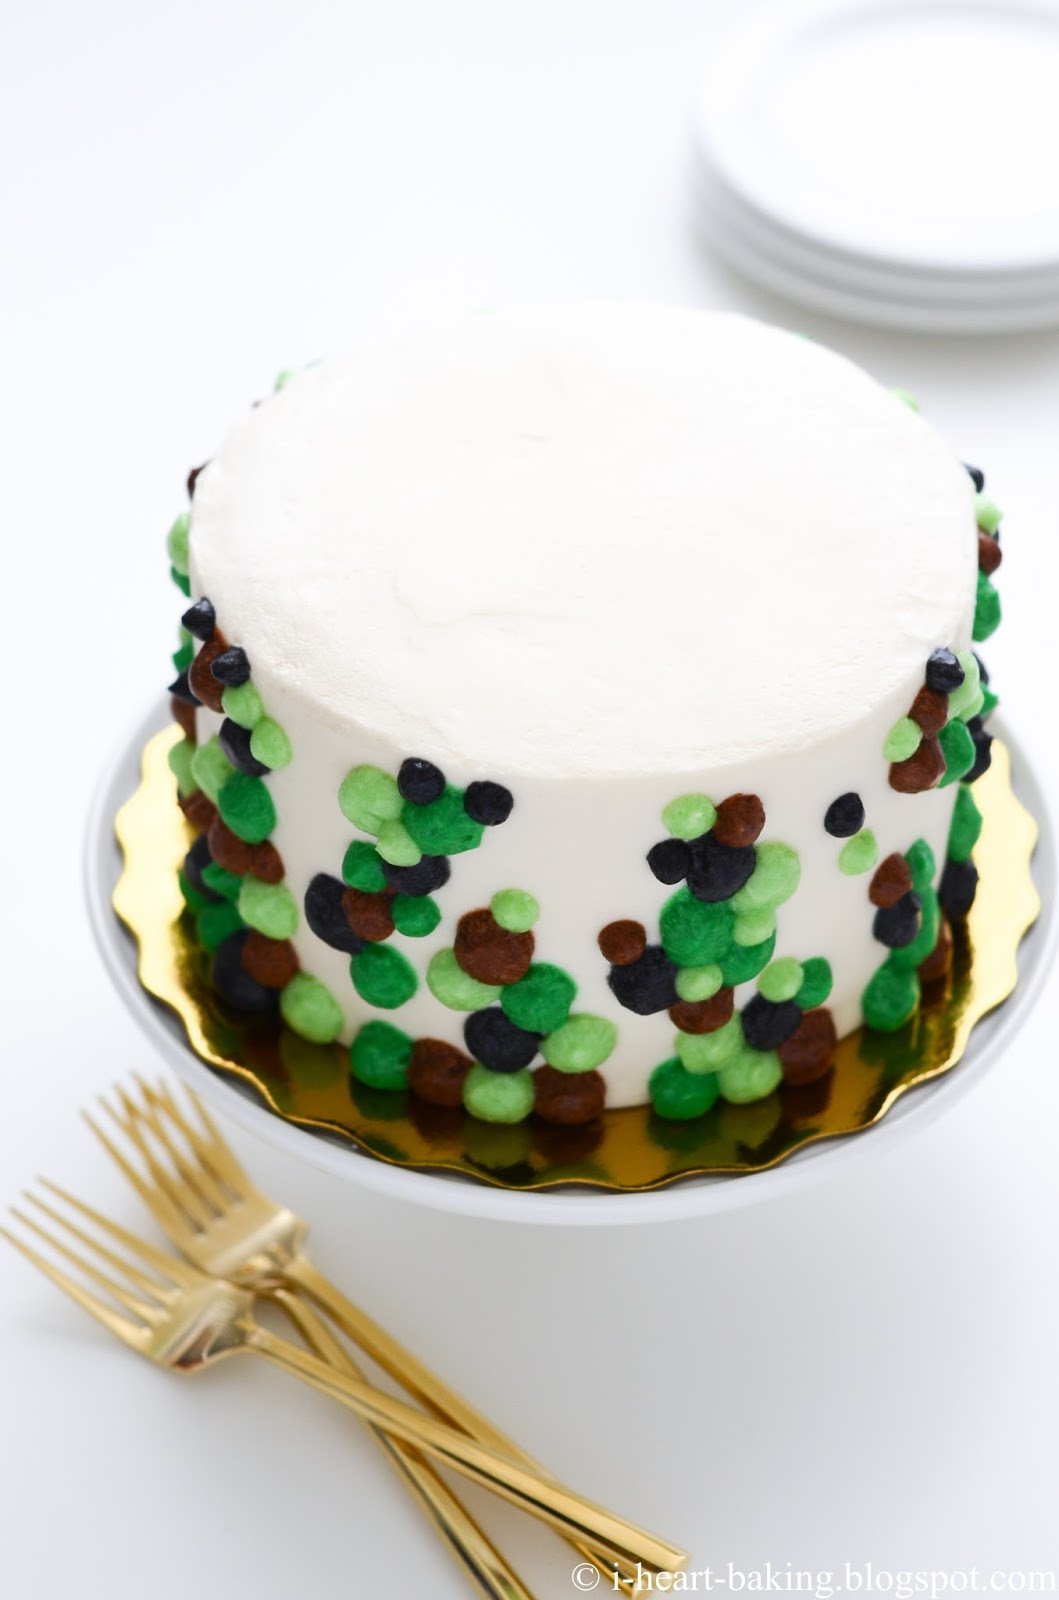 Polka Dot Birthday Cake
 i heart baking camouflage inspired polka dot birthday cake